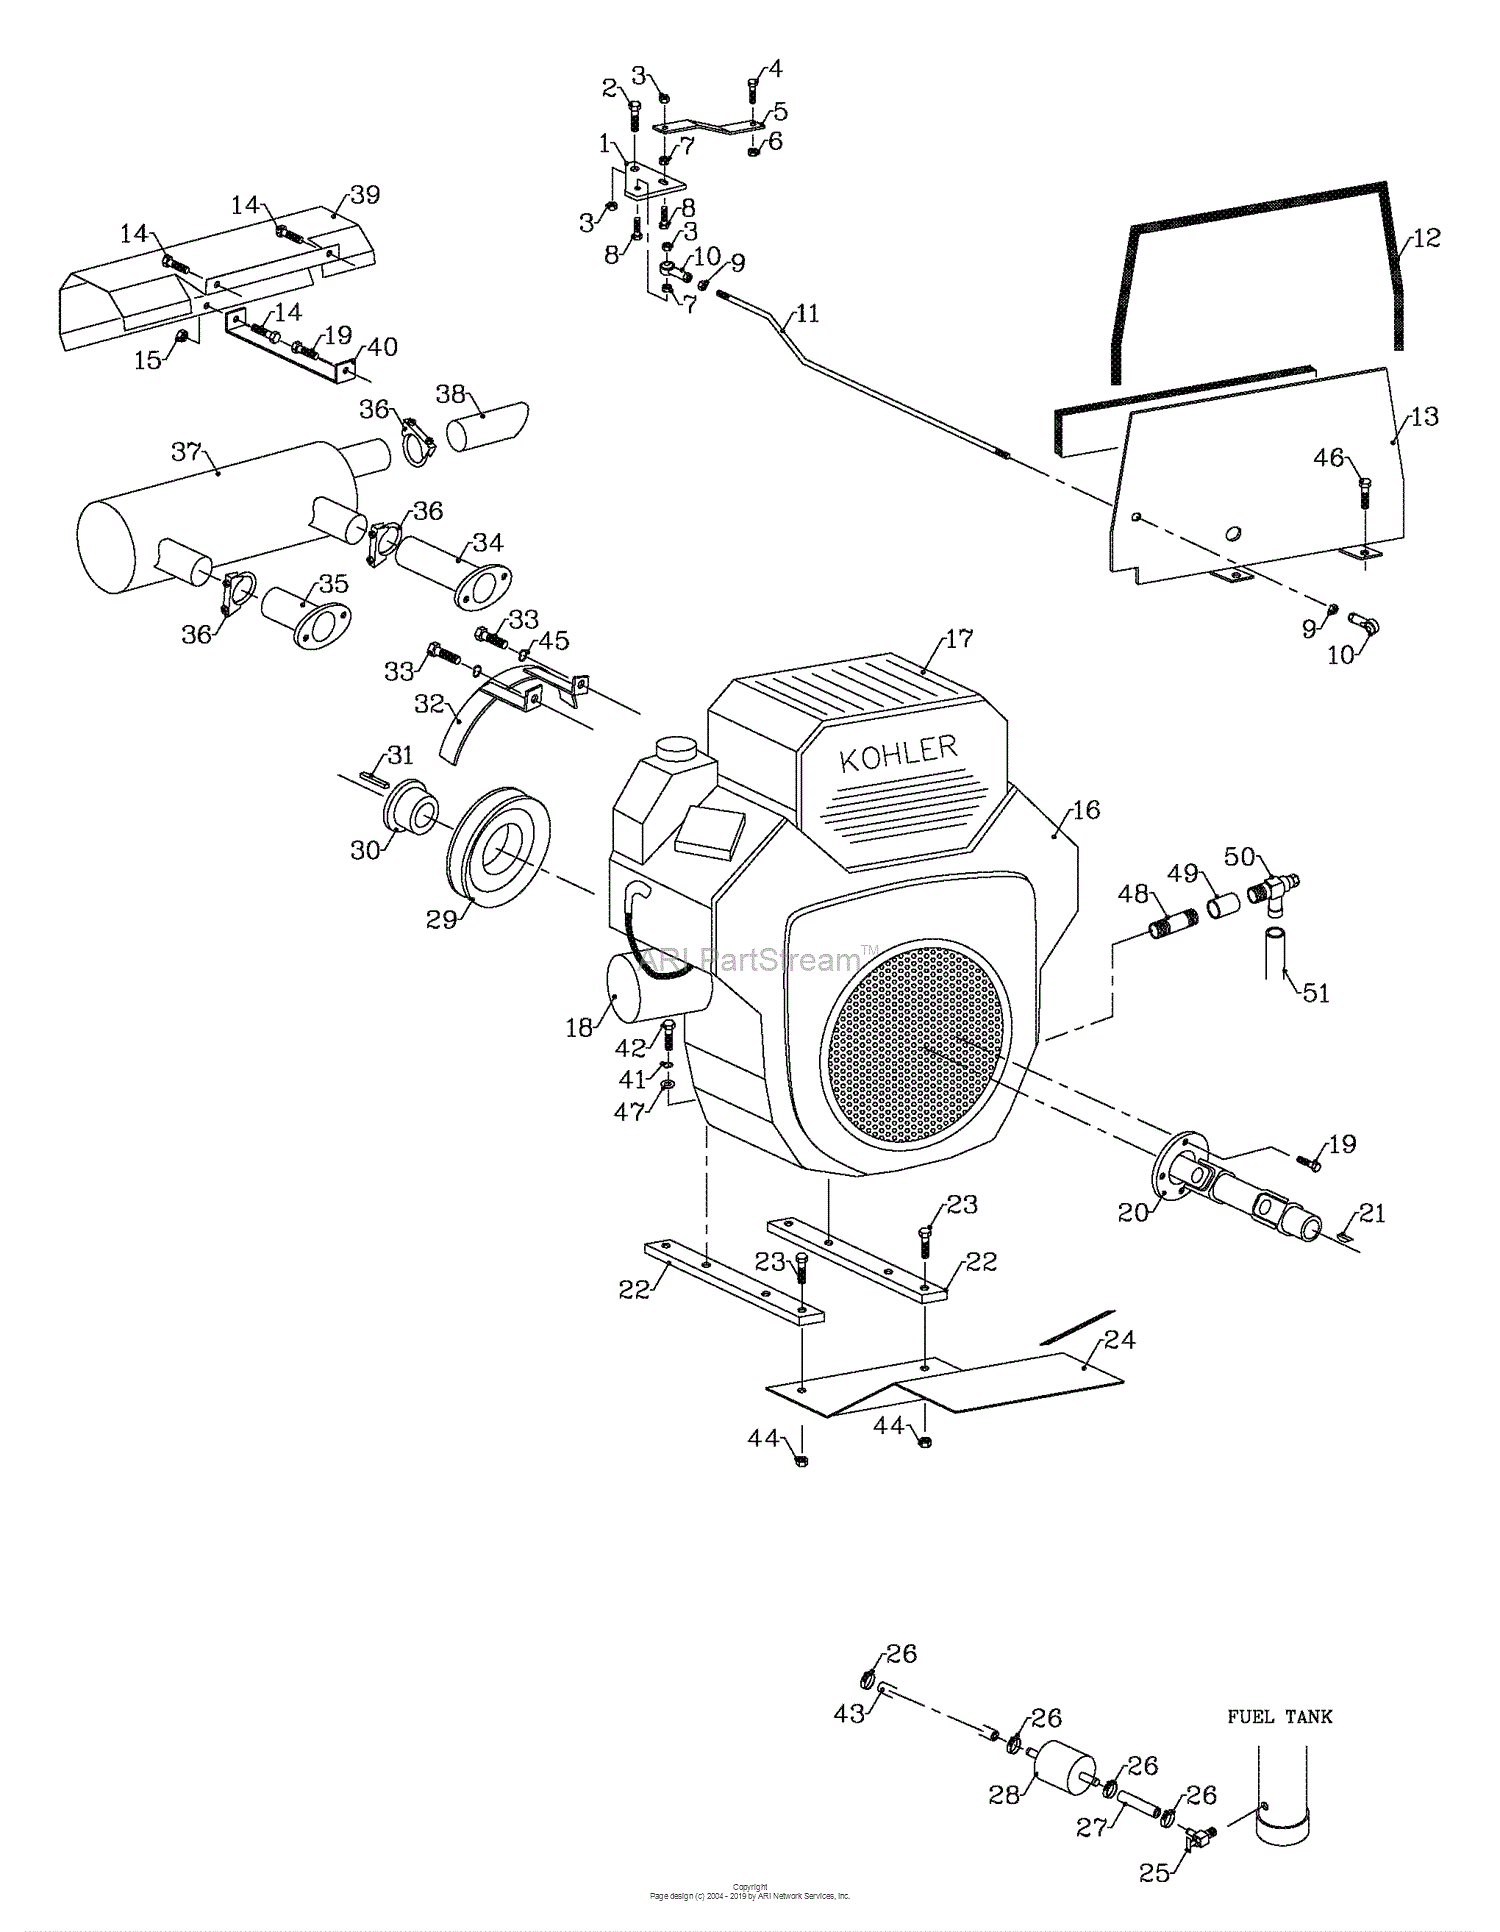 Kohler Engine Air System Diagram